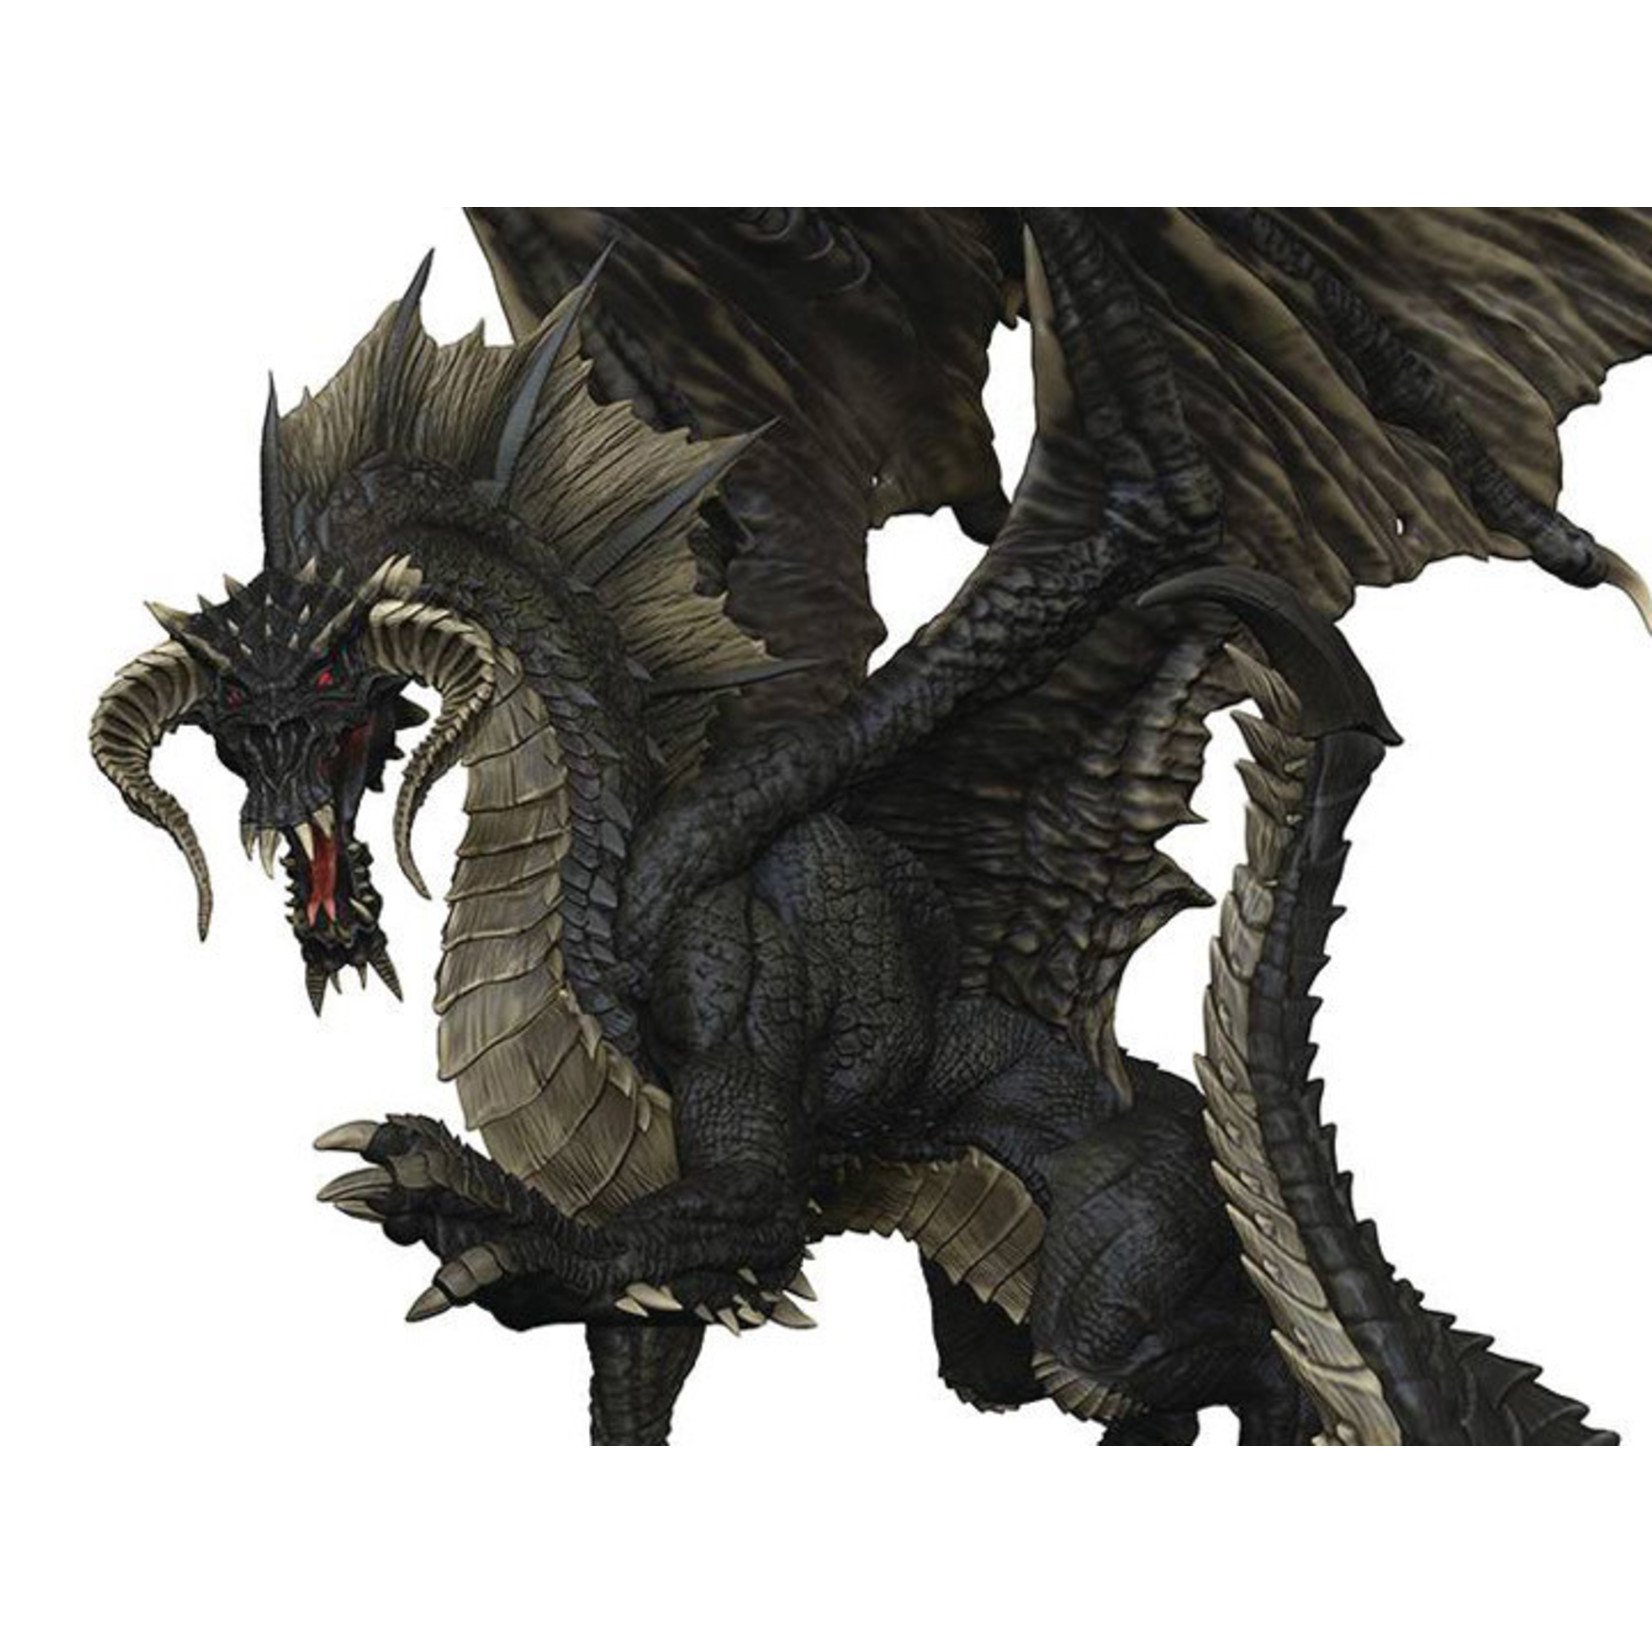 D&D: Adult Black Dragon Premium Figure Dungeons & Dragons Fantasy Miniatures